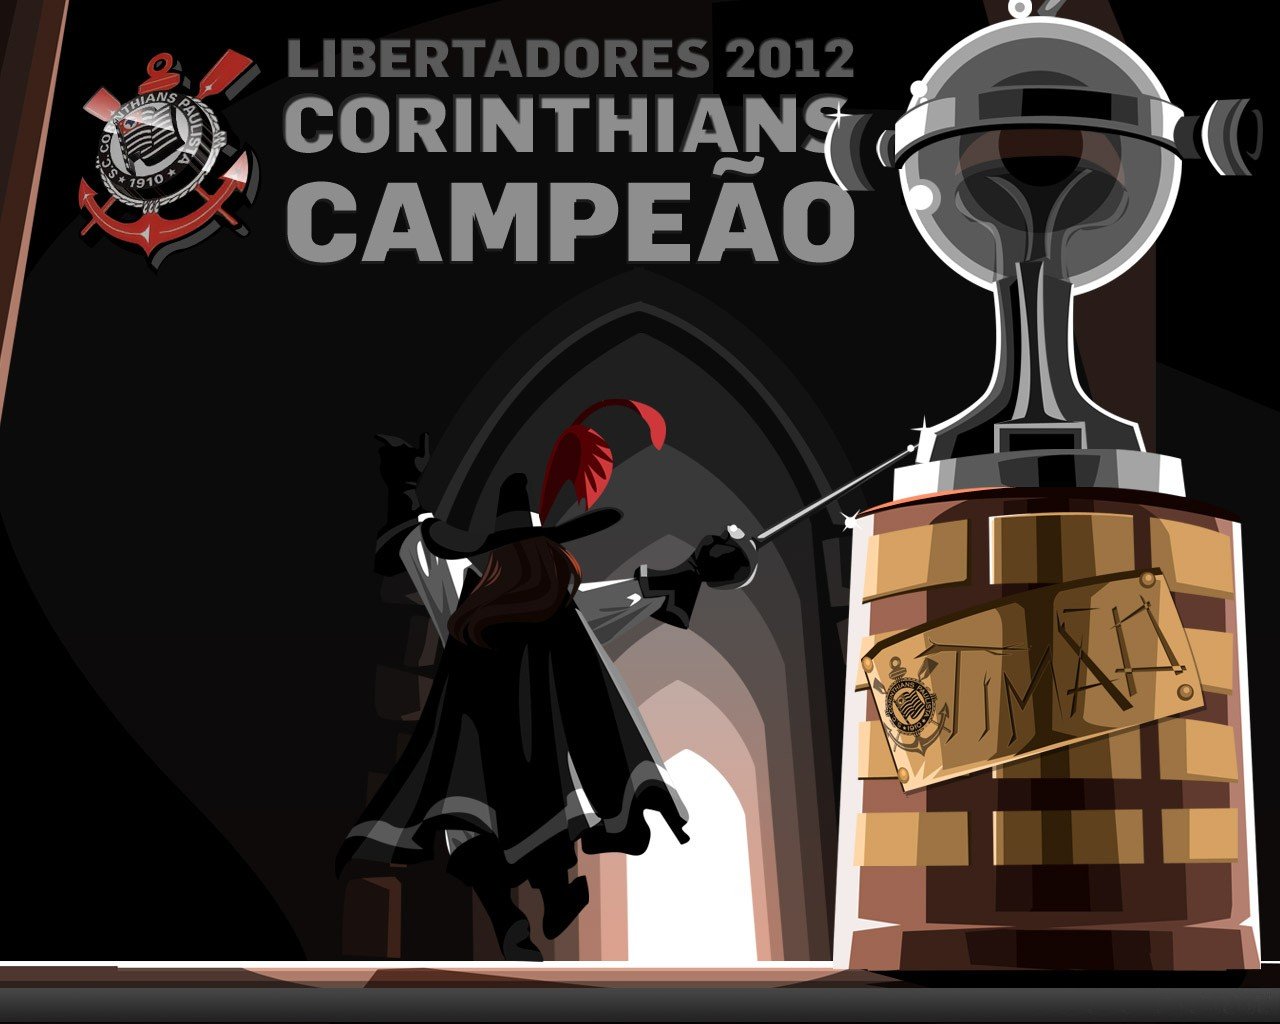 Corinthians, Brasil Wallpaper